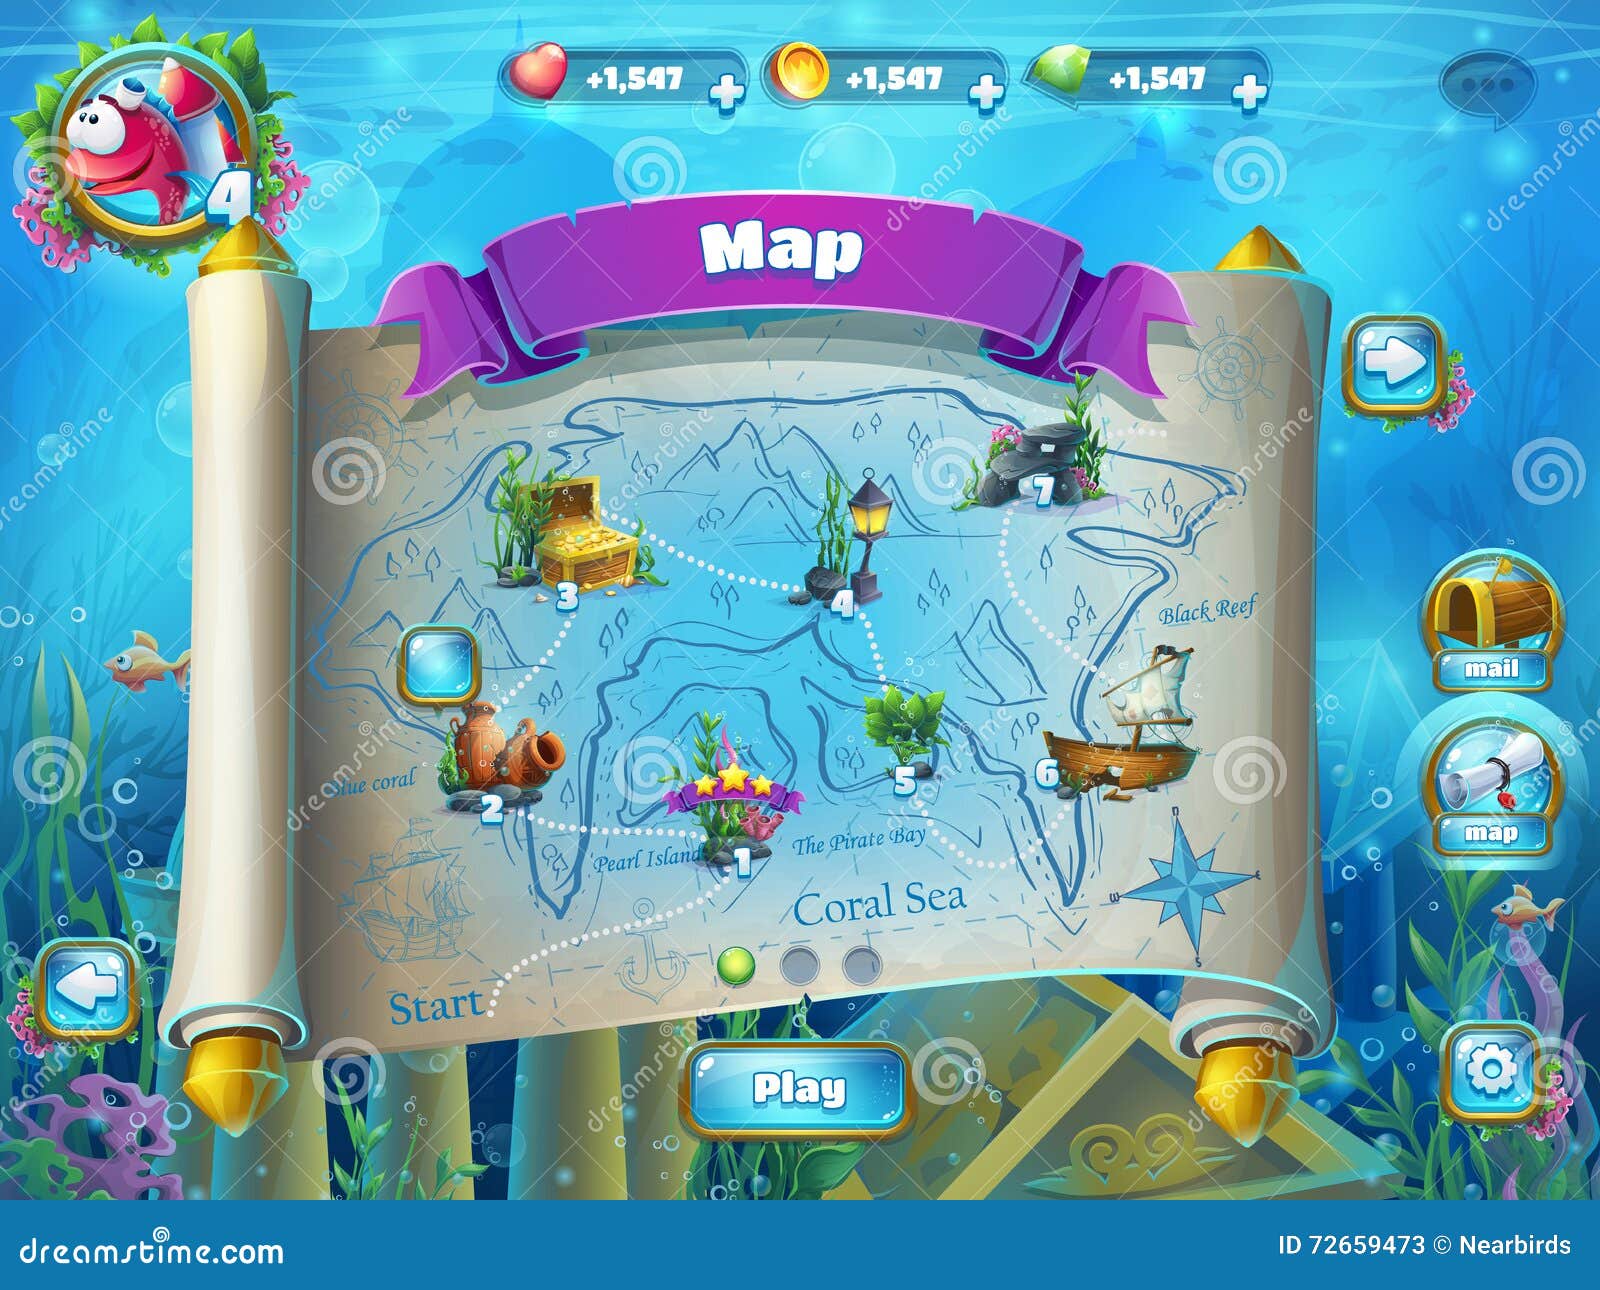 atlantis ruins with fish rocket - level game map